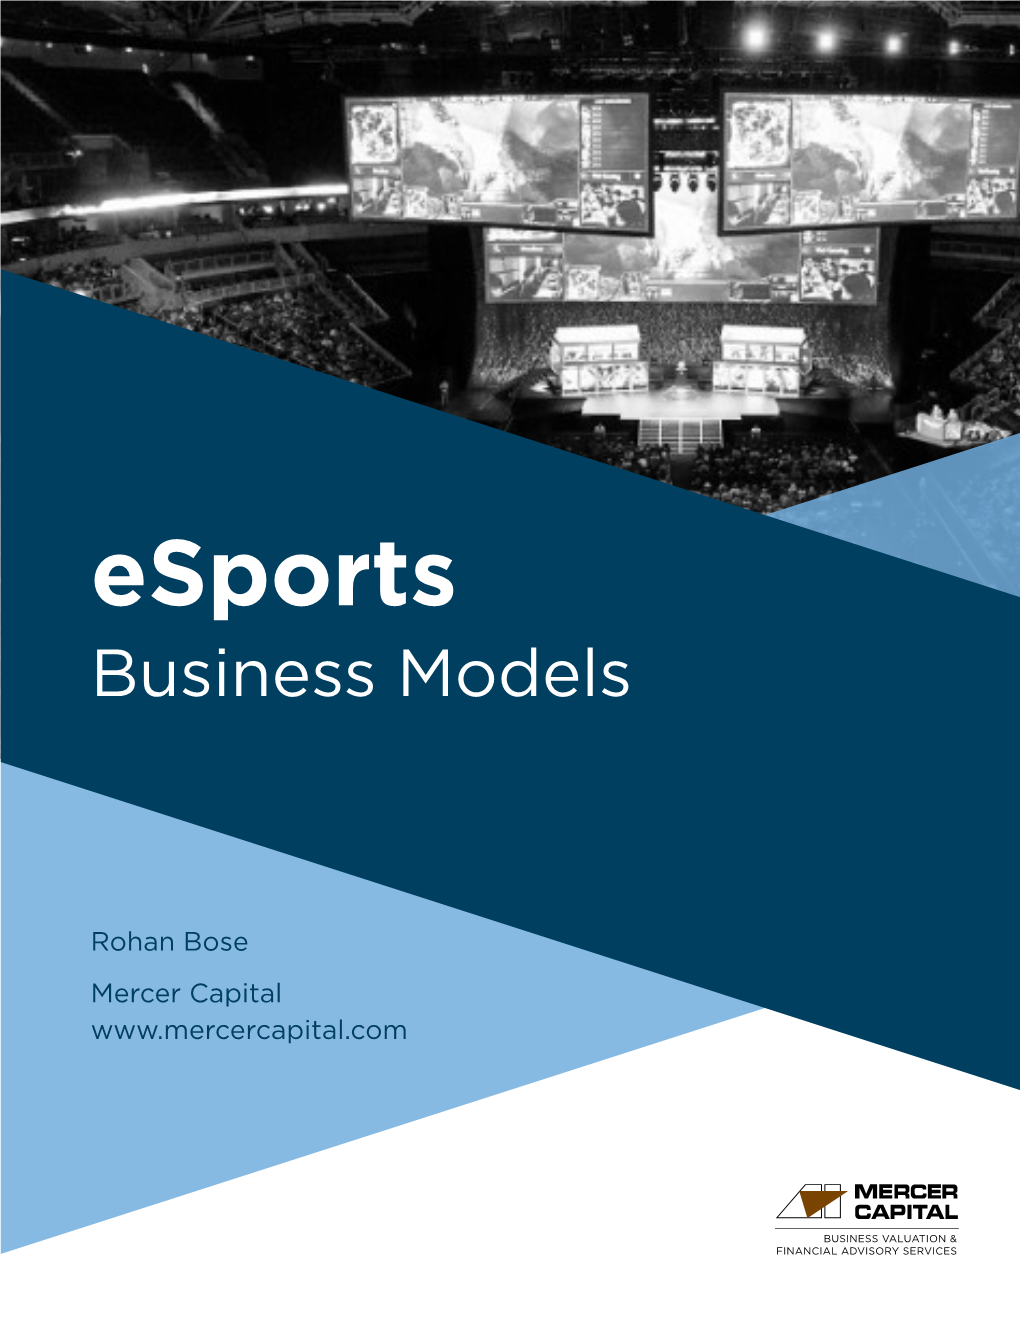 Esports Business Models